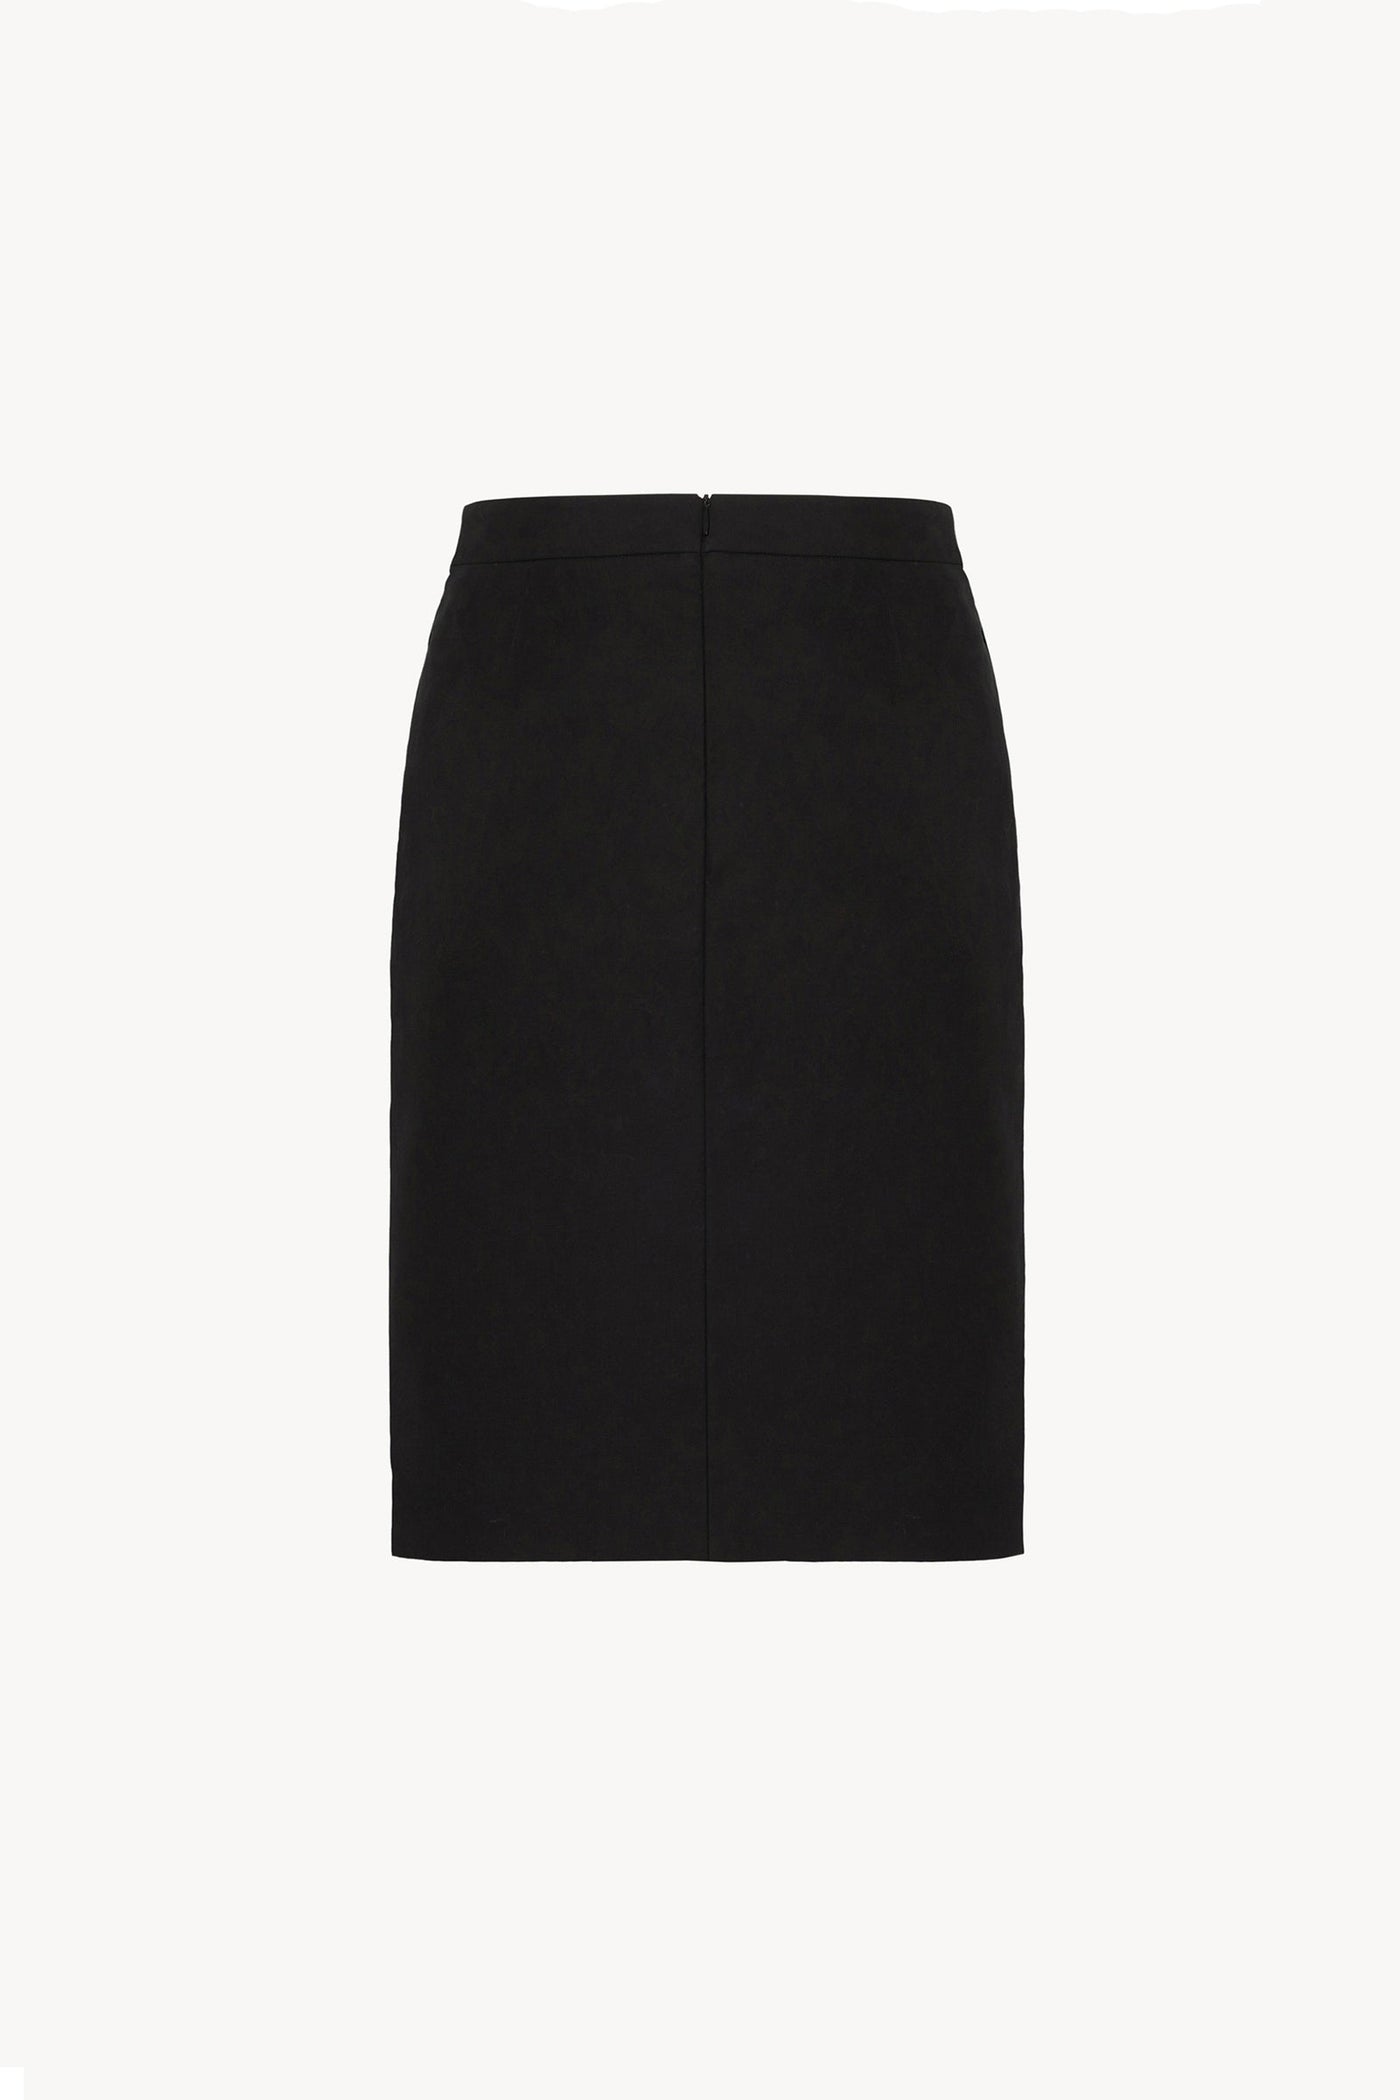 the-row-benson-skirt-black-amarees